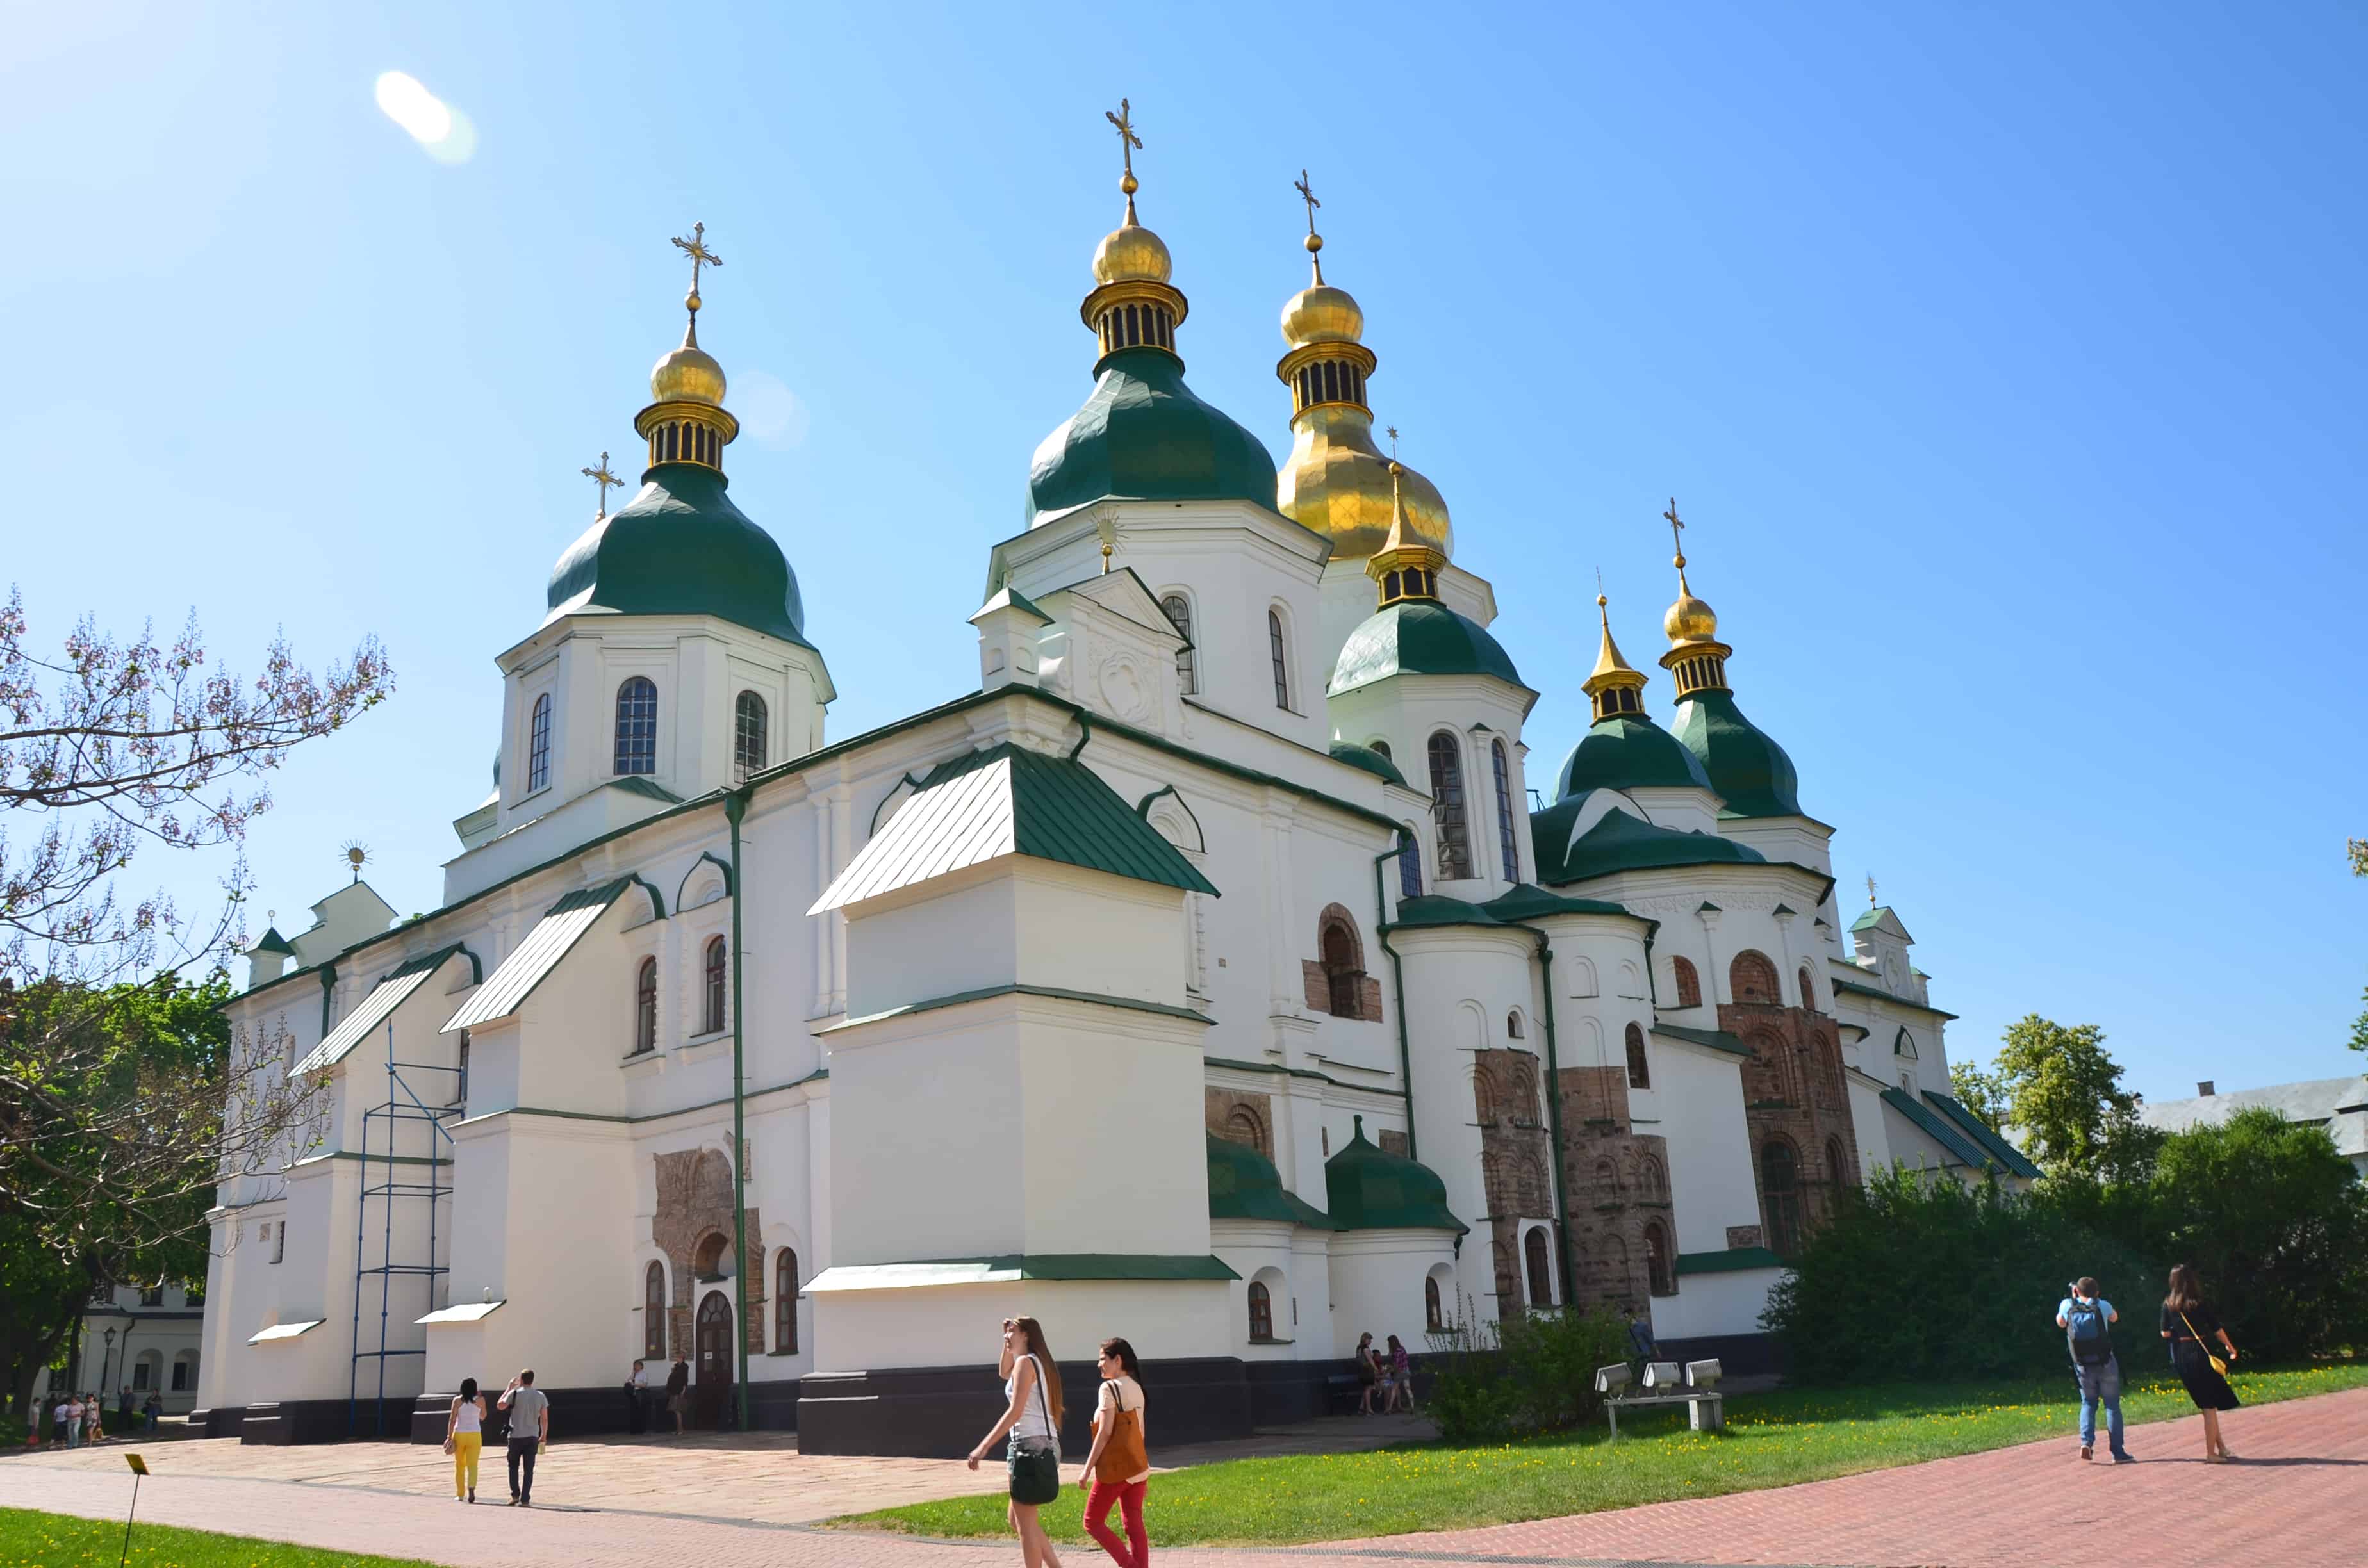 Saint Sophia Cathedral complex in Kyiv, Ukraine